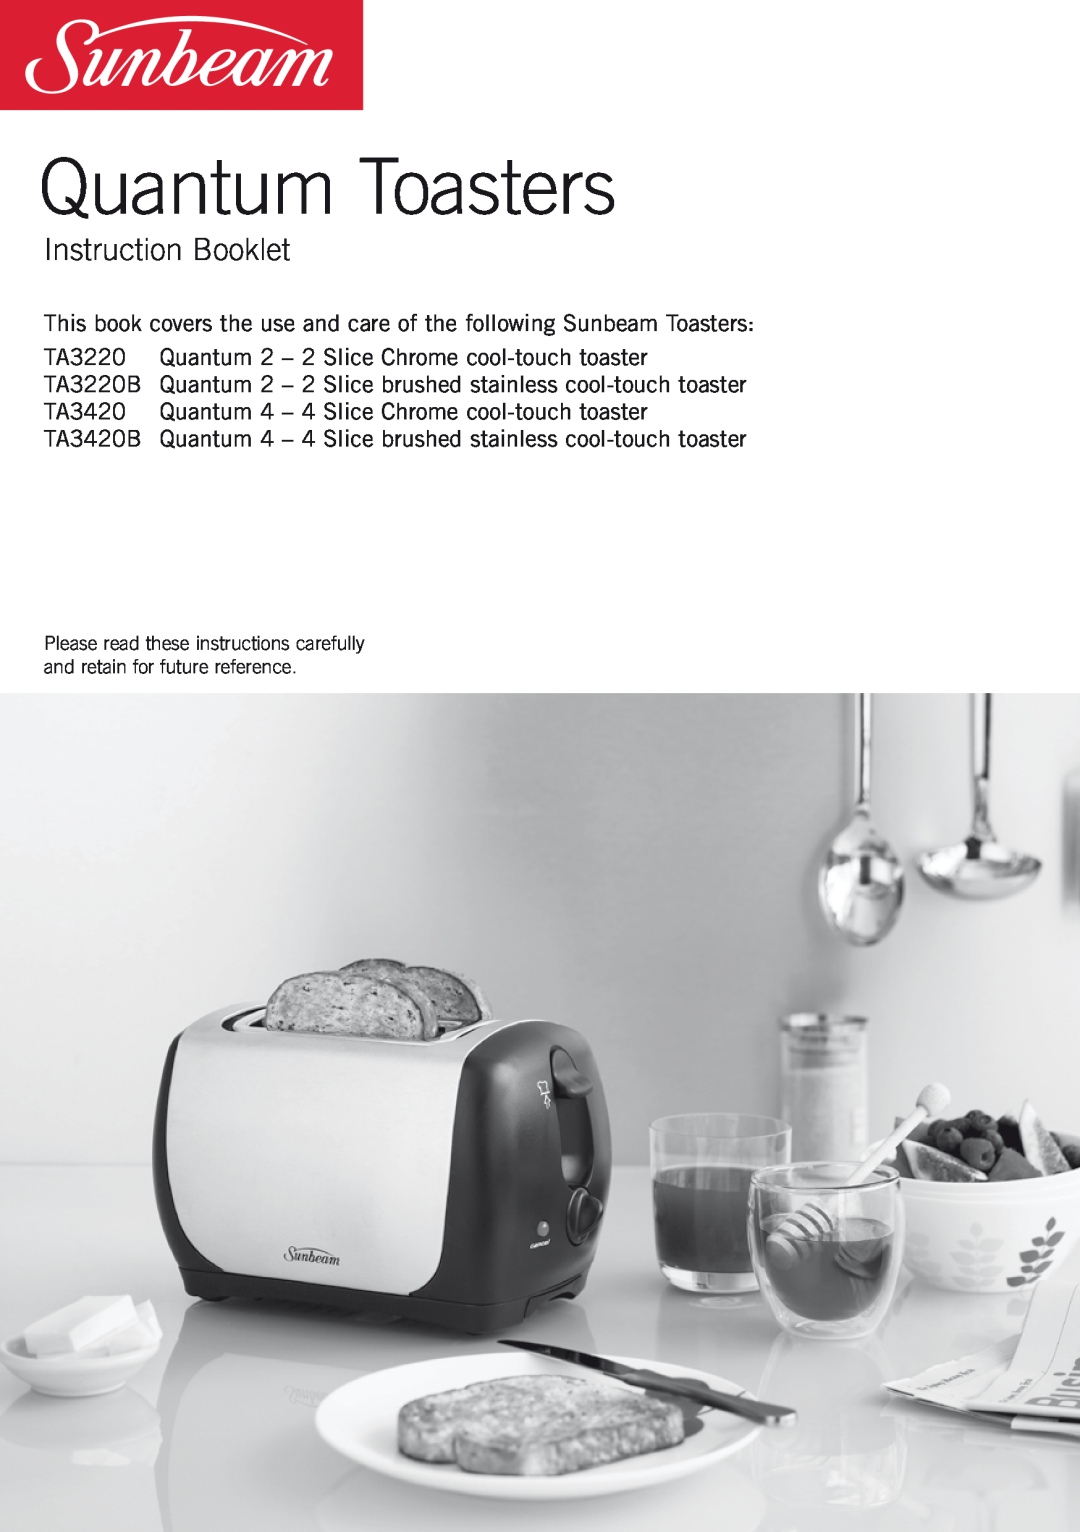 Sunbeam TA3420B, TA3220B manual Instruction Booklet, Quantum Toasters 